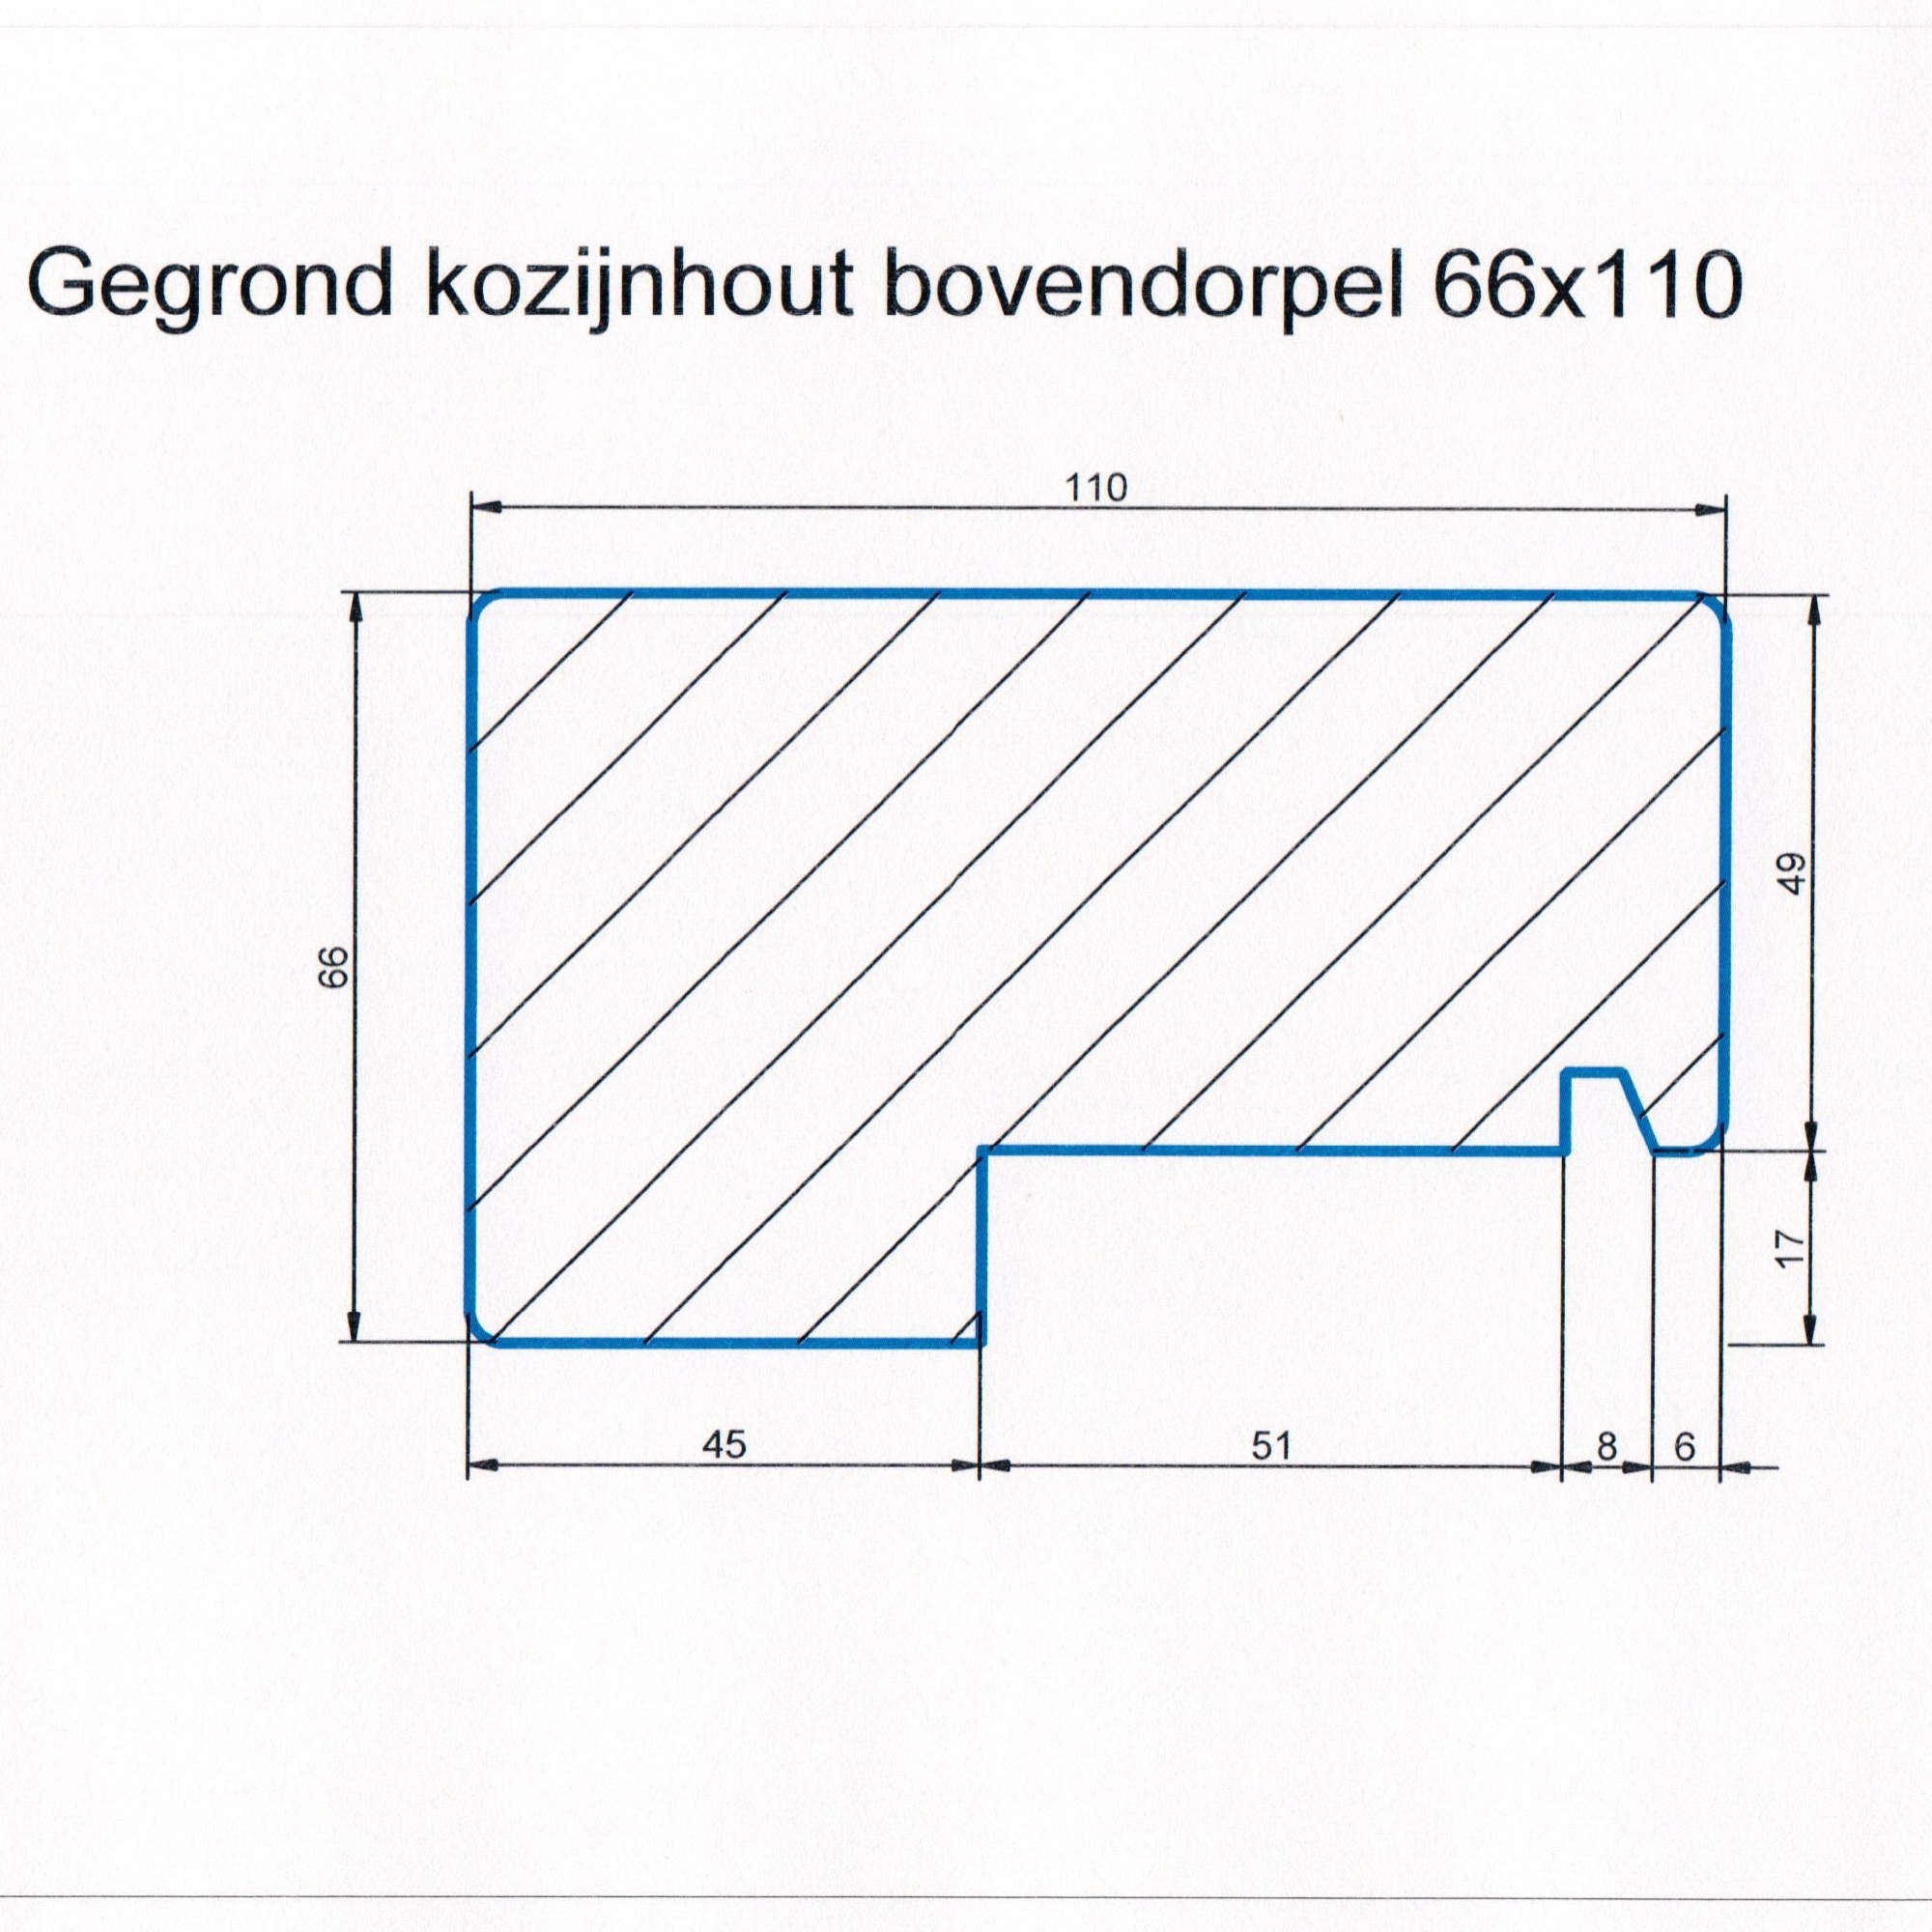 Hardhout 66x110 kozijnhout gegrond L=3540 bovendorpel